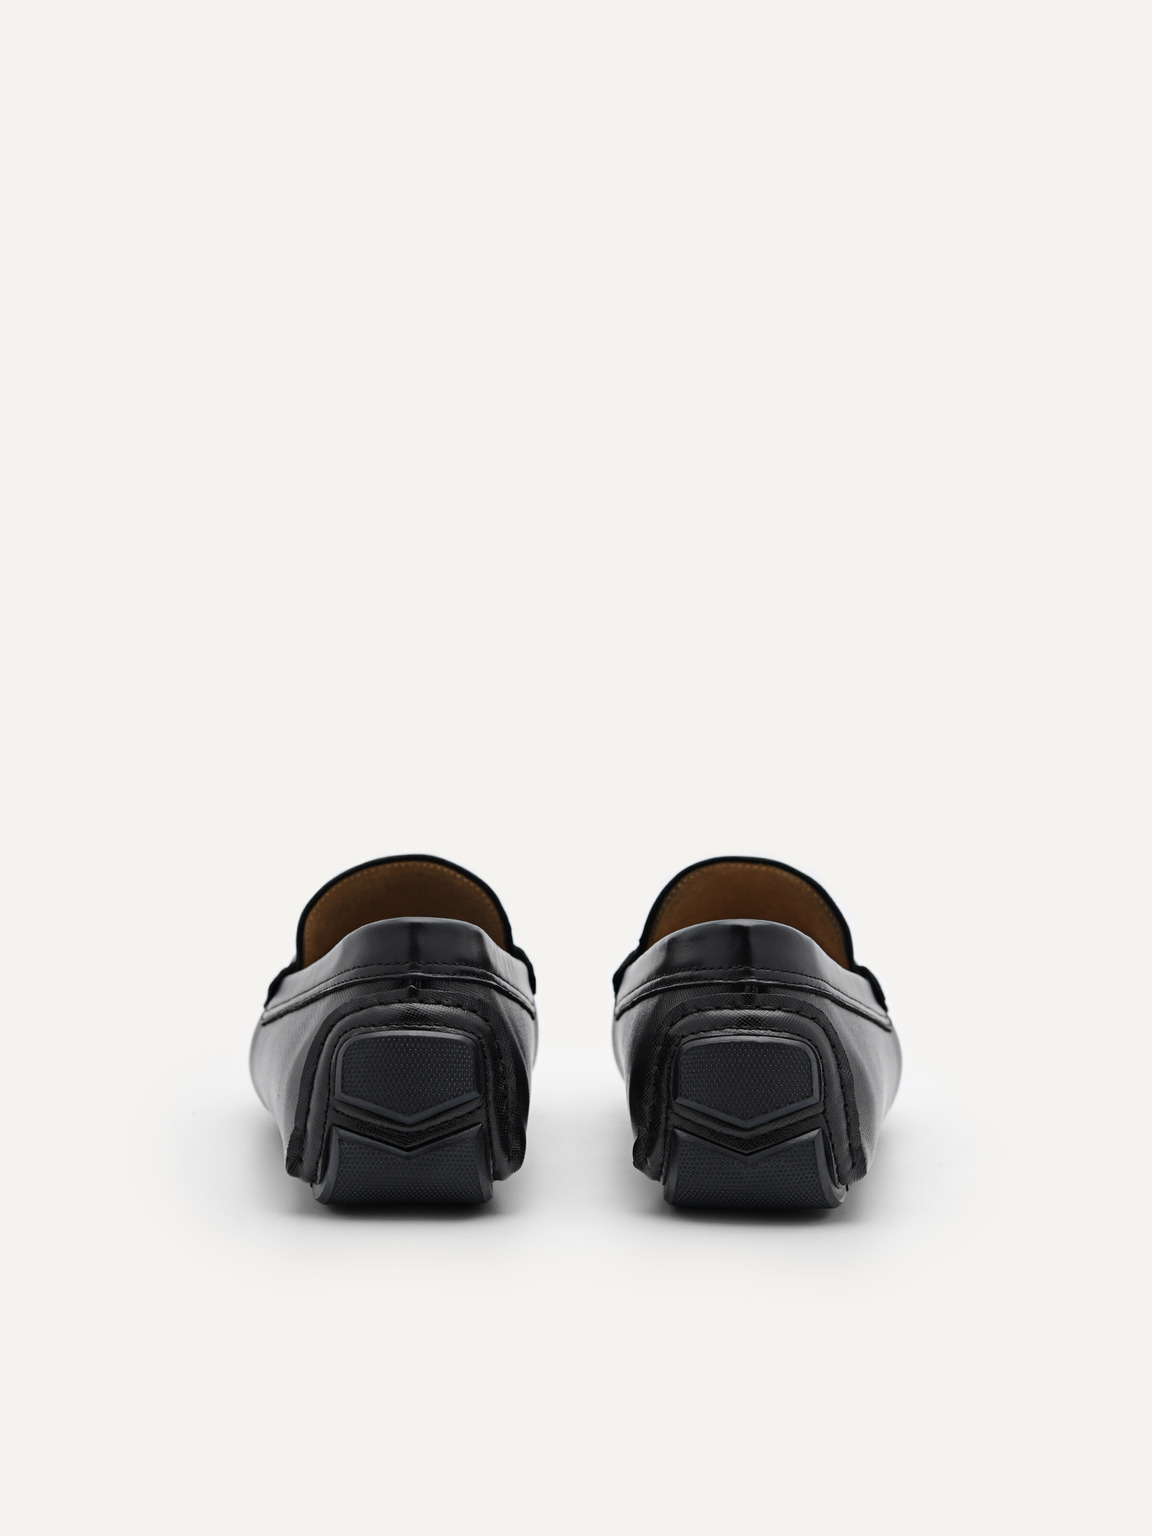 Antonio Leather Driving Shoes, Black